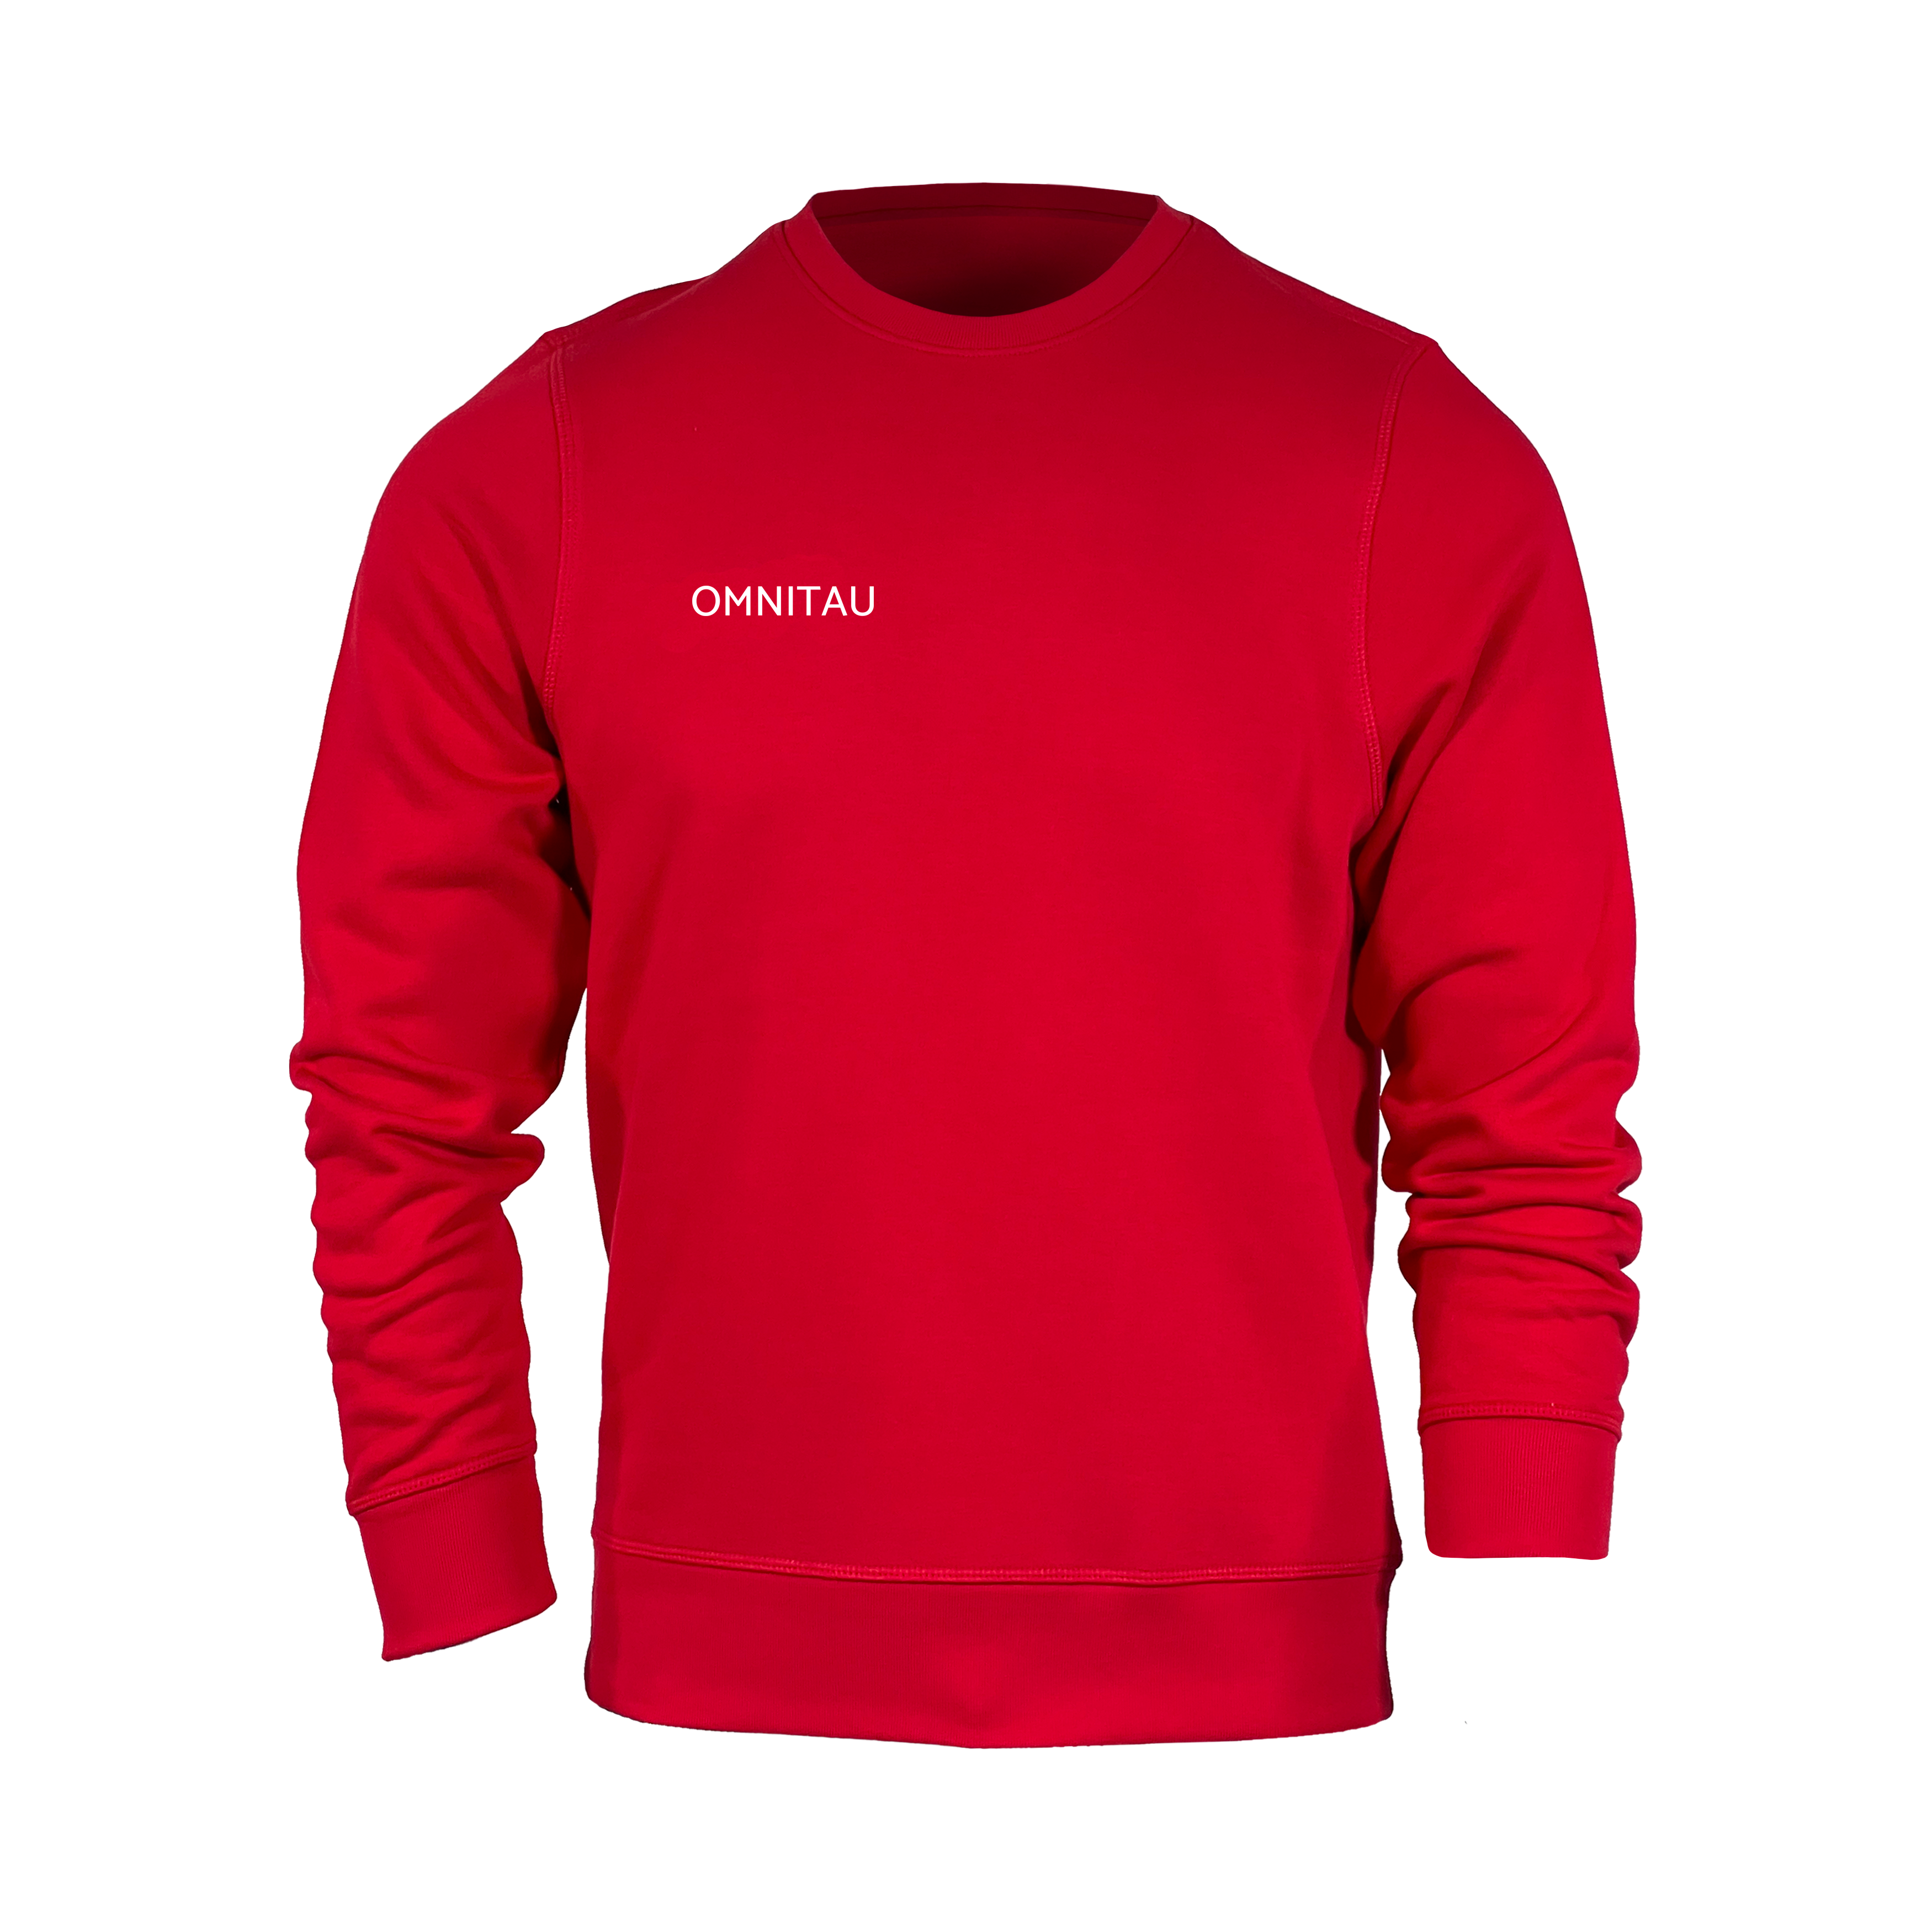 Omnitau Kid's Team Sports Organic Cotton Sweatshirt - Red